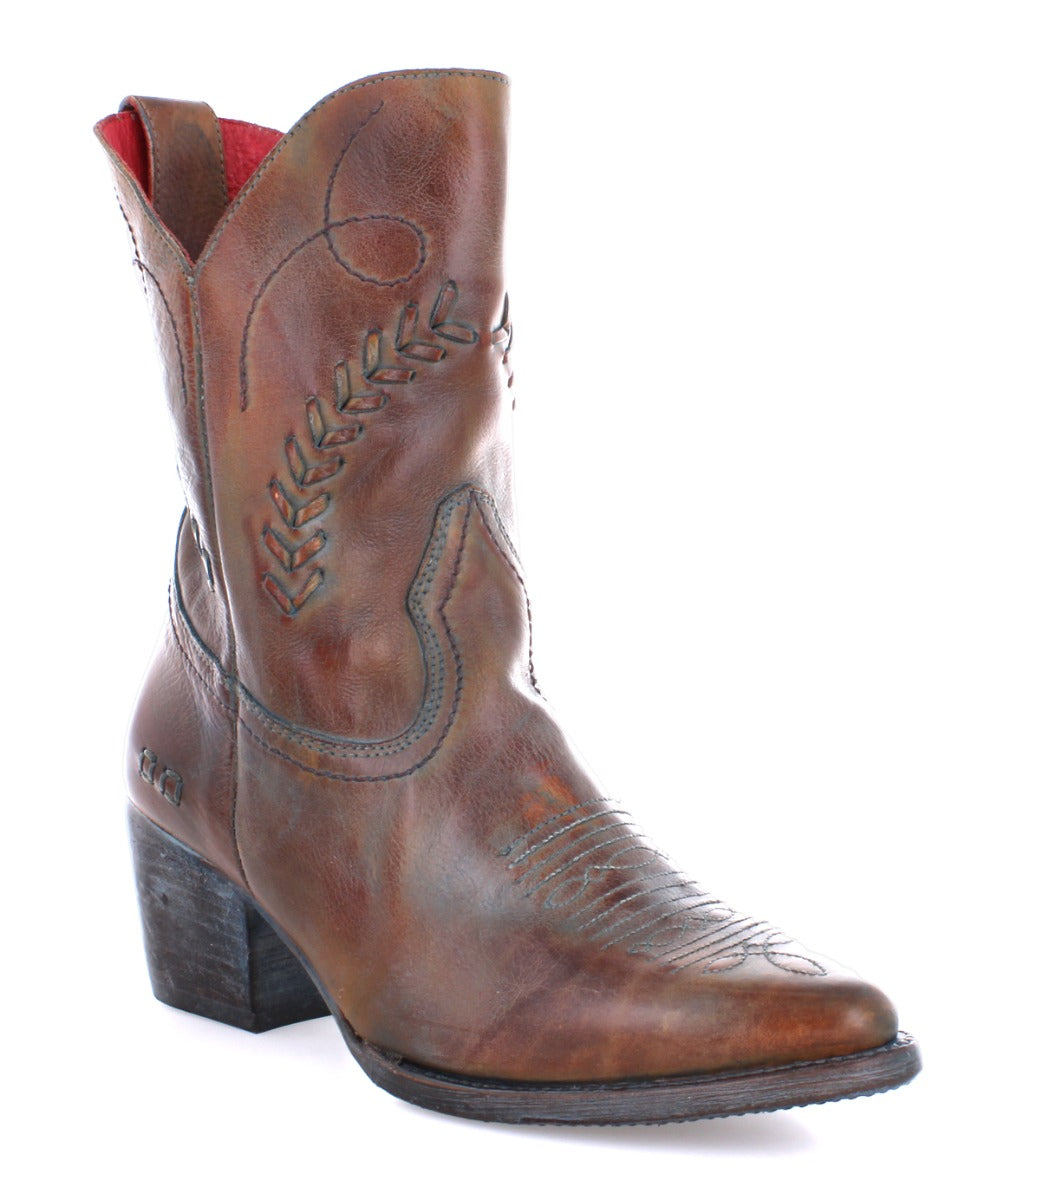 A women's brown cowboy boot: The Bed Stu Amanda II.